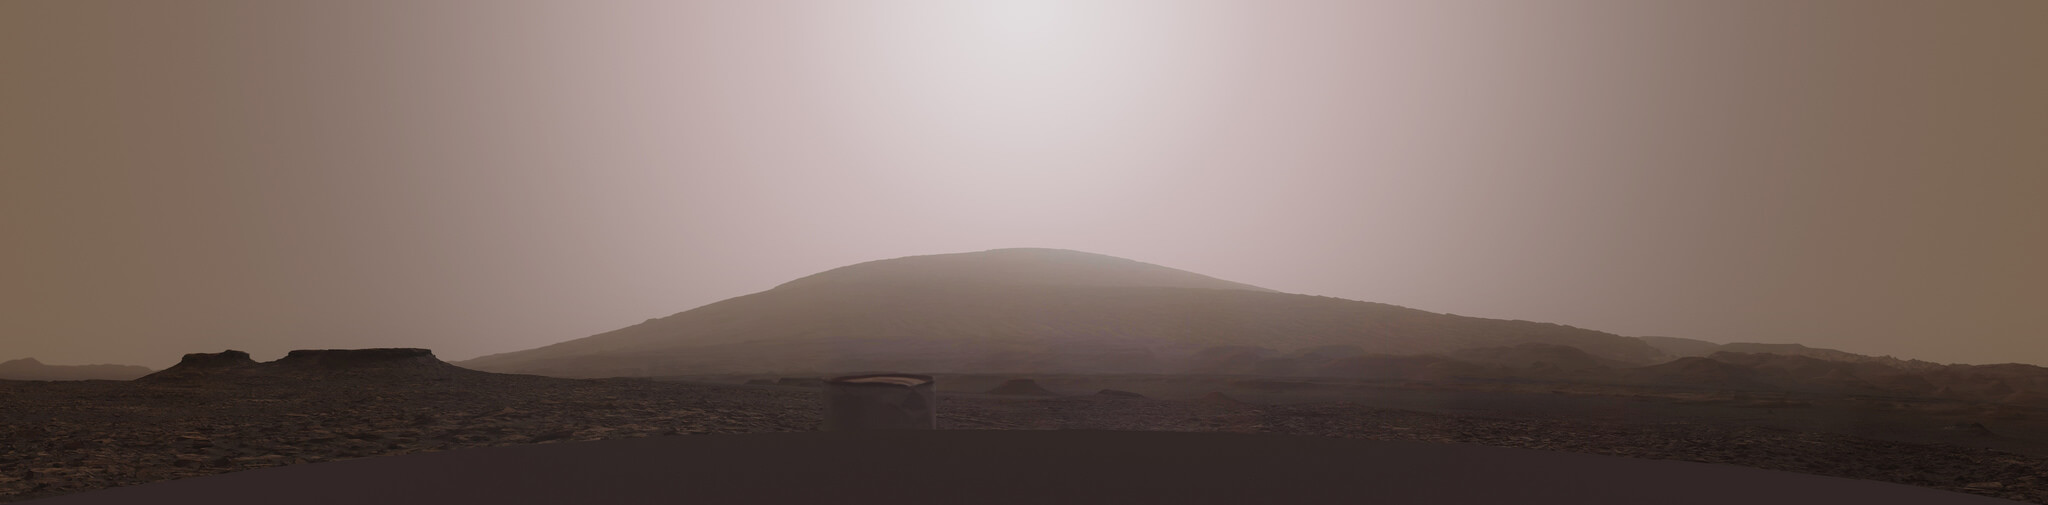 Curiosity панорама хребет Веры Рубин by sean Doran :: Бортовой журнал Ктулху :: khtulhu.org.ua